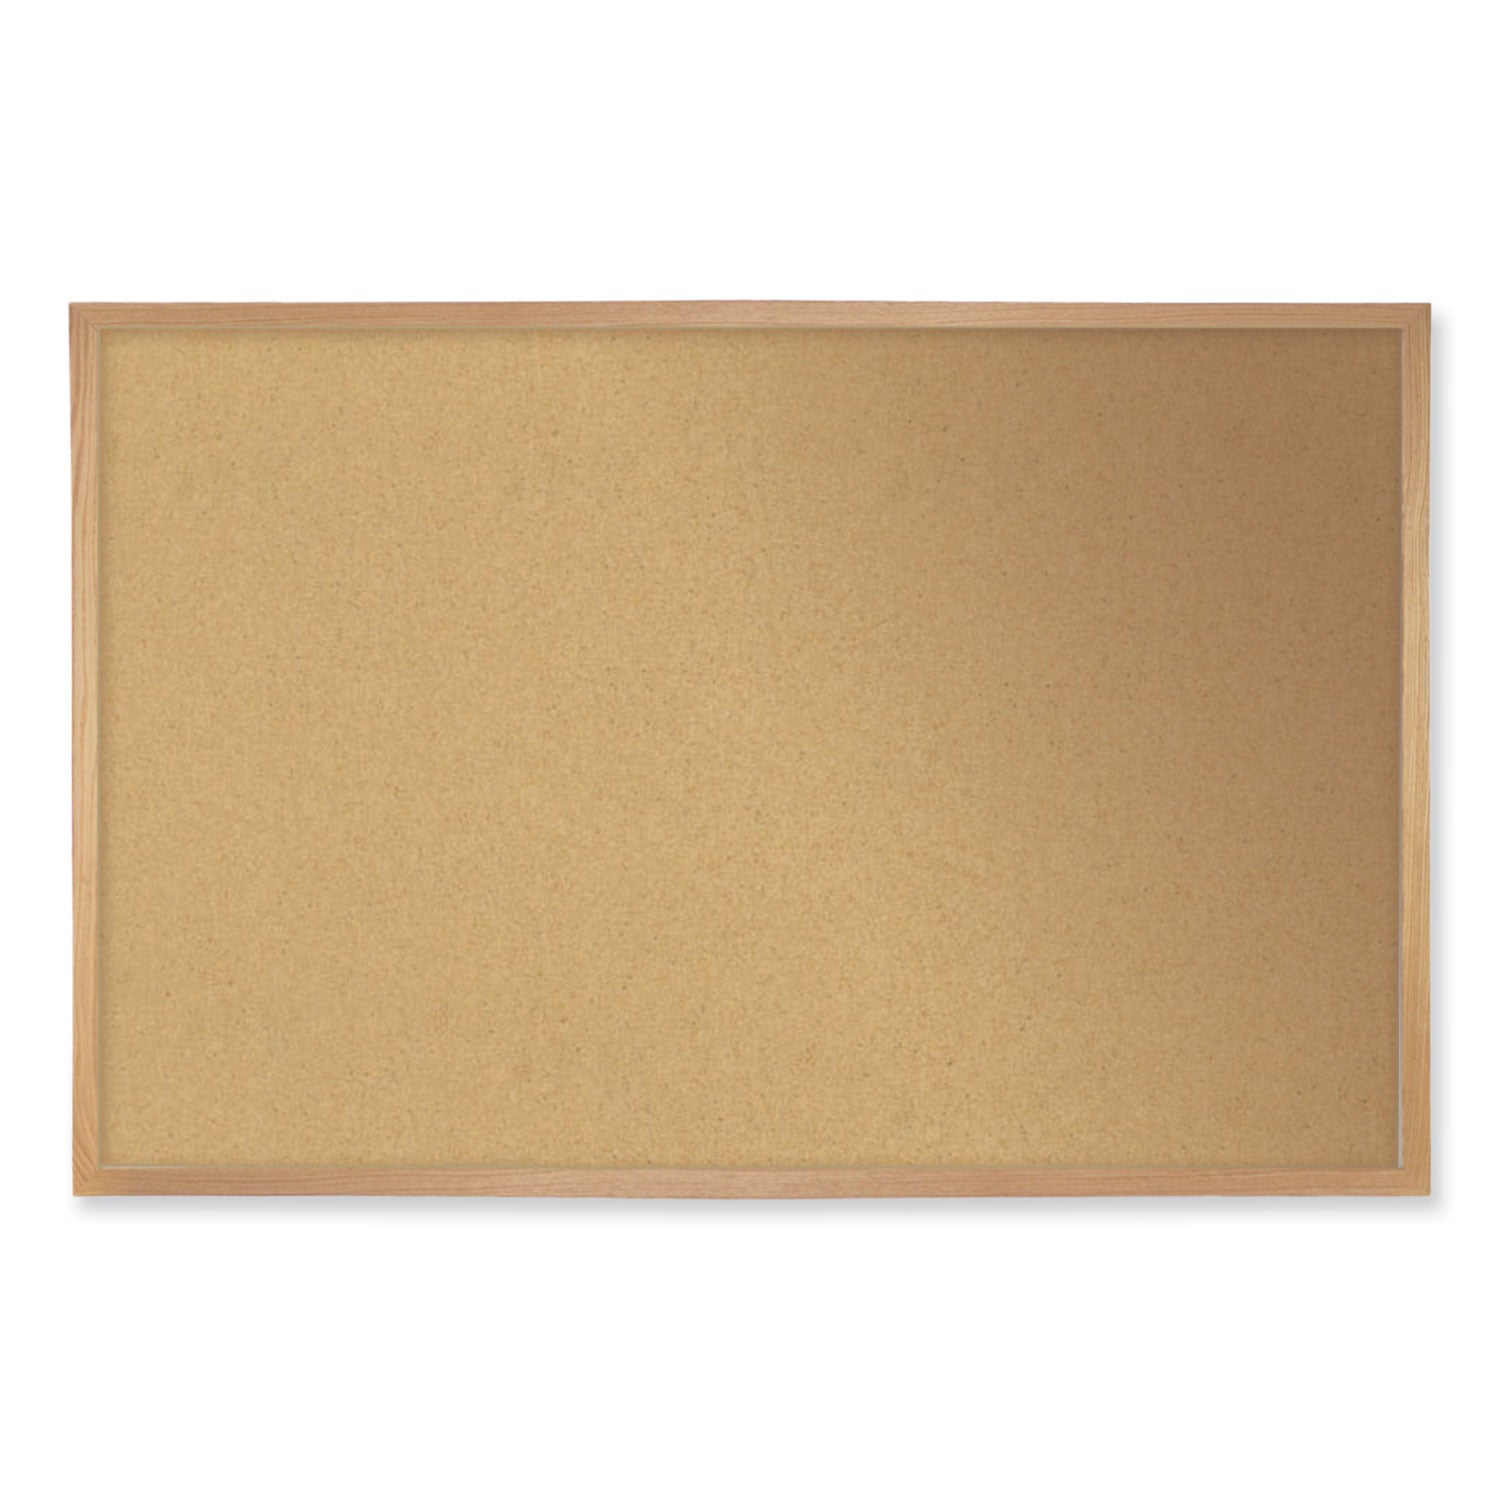 natural-cork-bulletin-board-with-frame-1205-x-485-tan-surface-oak-frame-ships-in-7-10-business-days_ghewk410 - 1